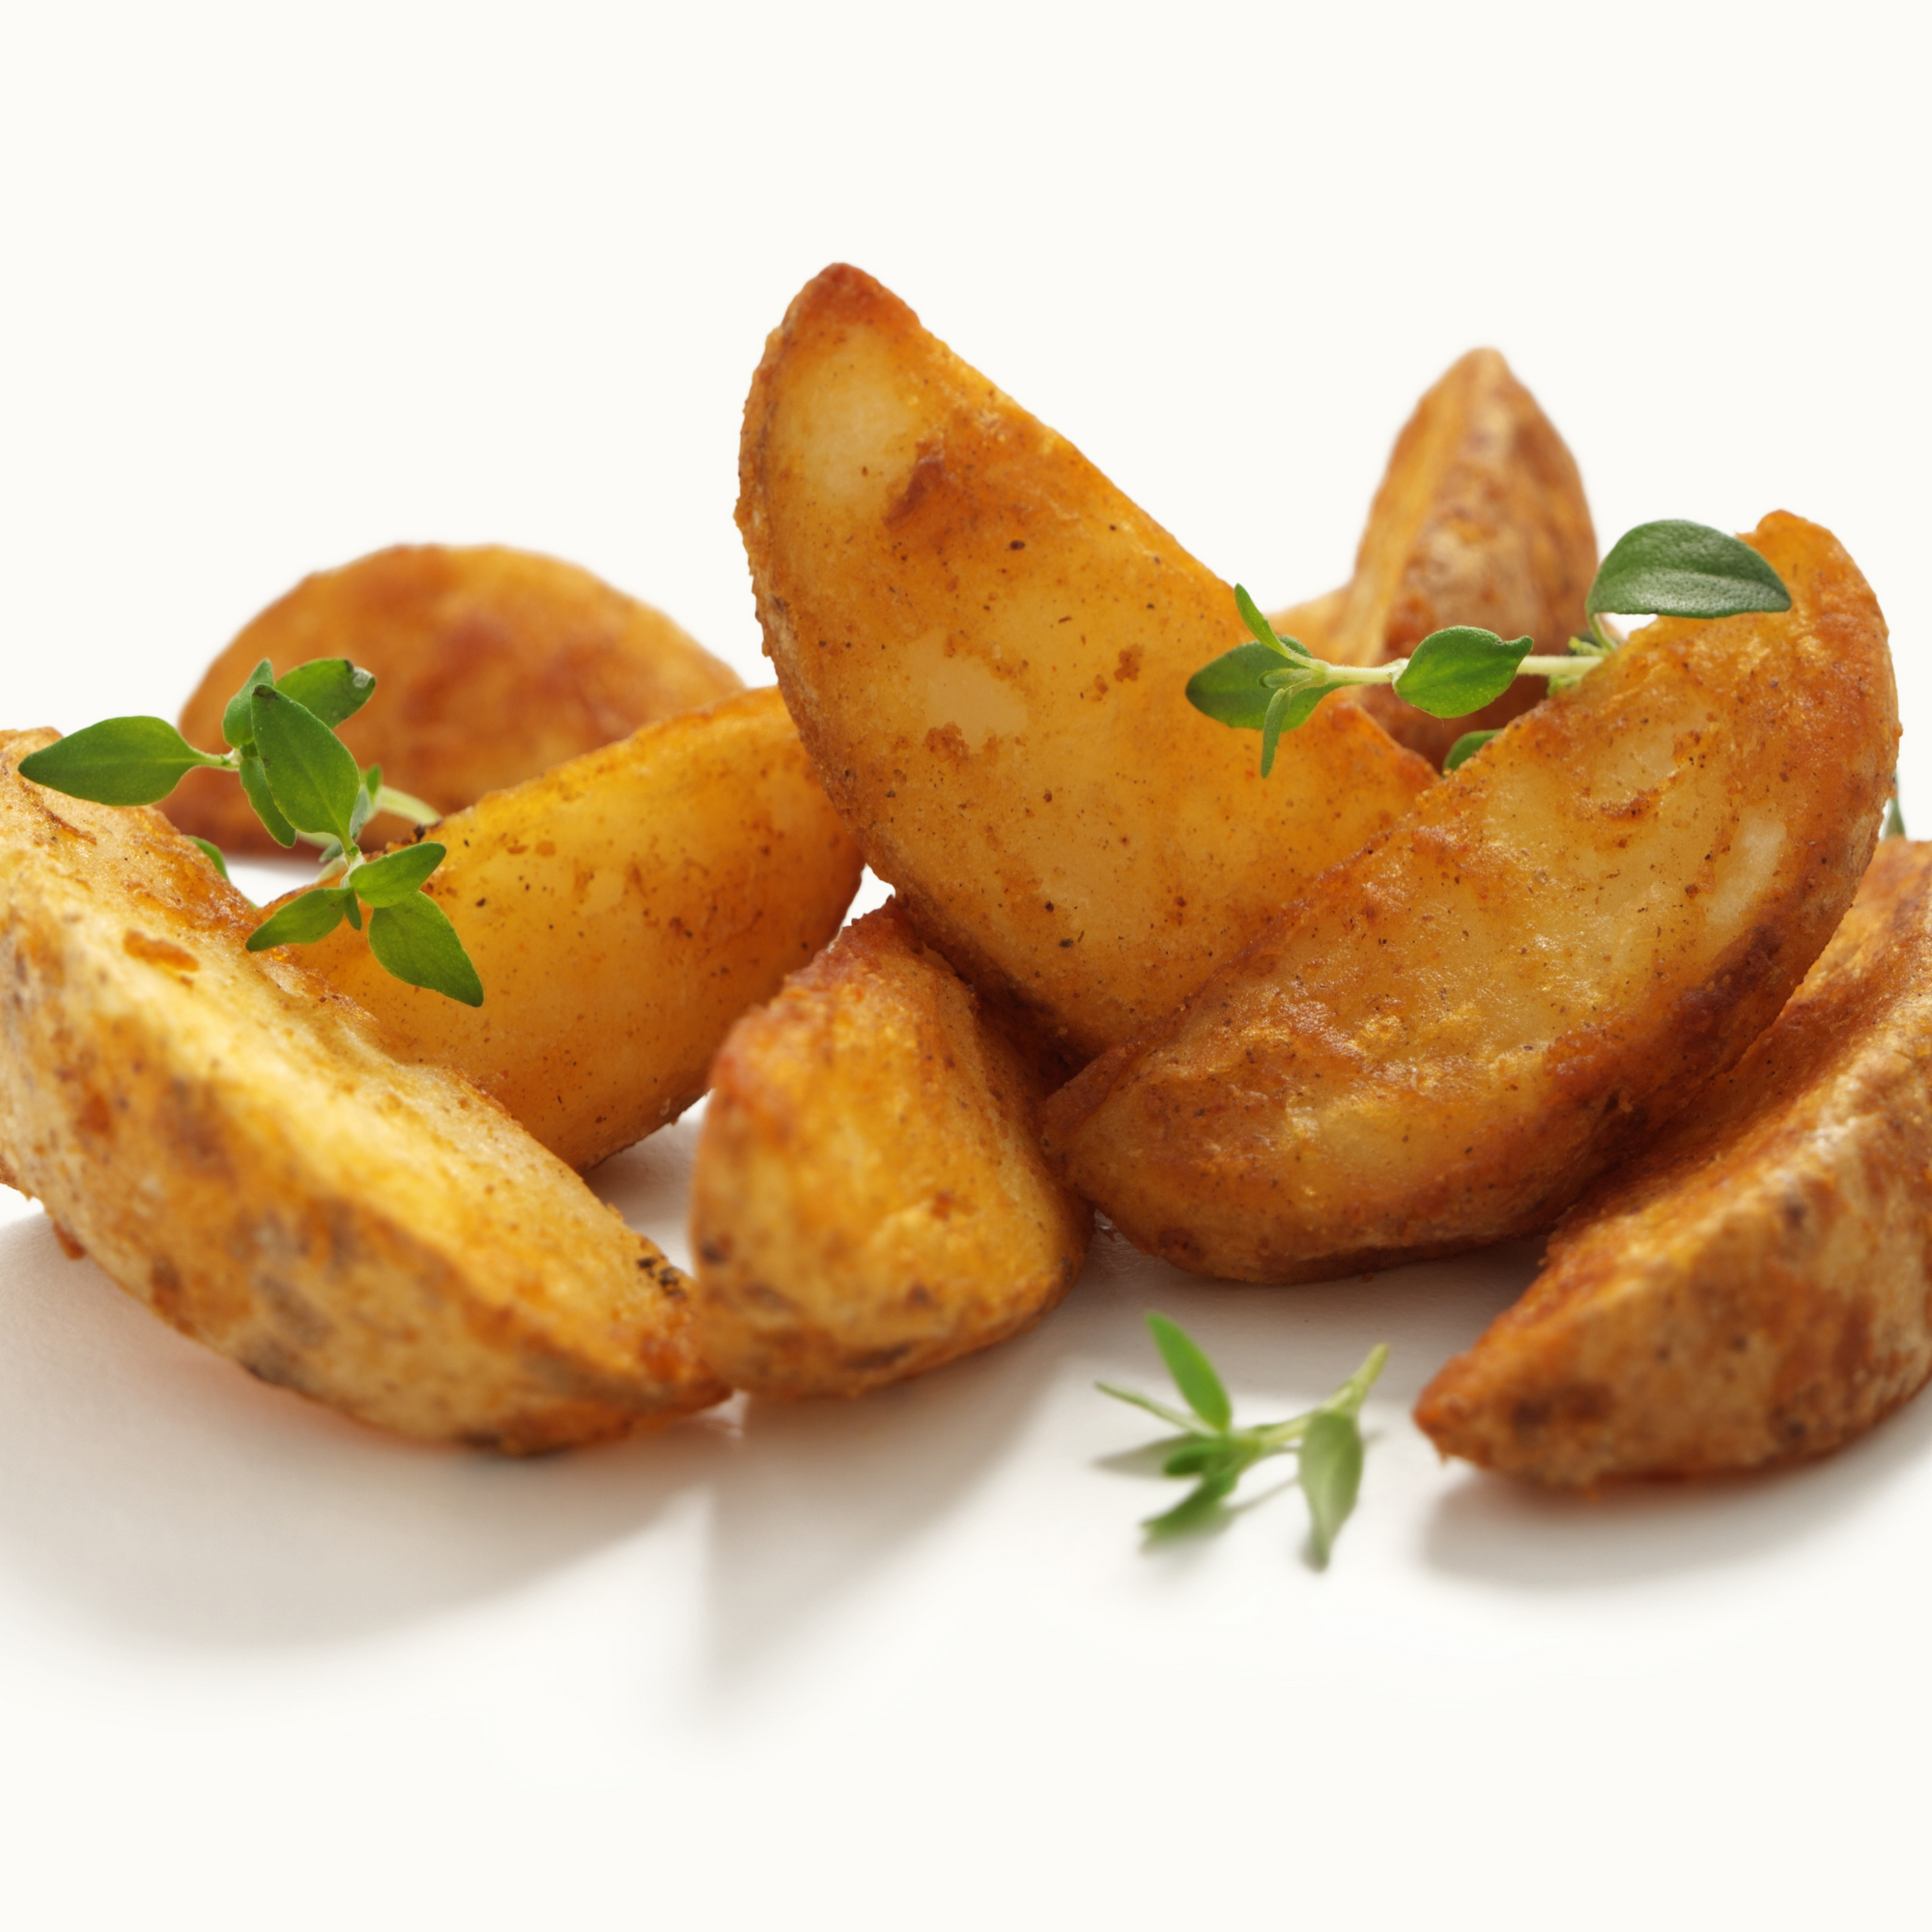 Homebake Parboiled Potatoes